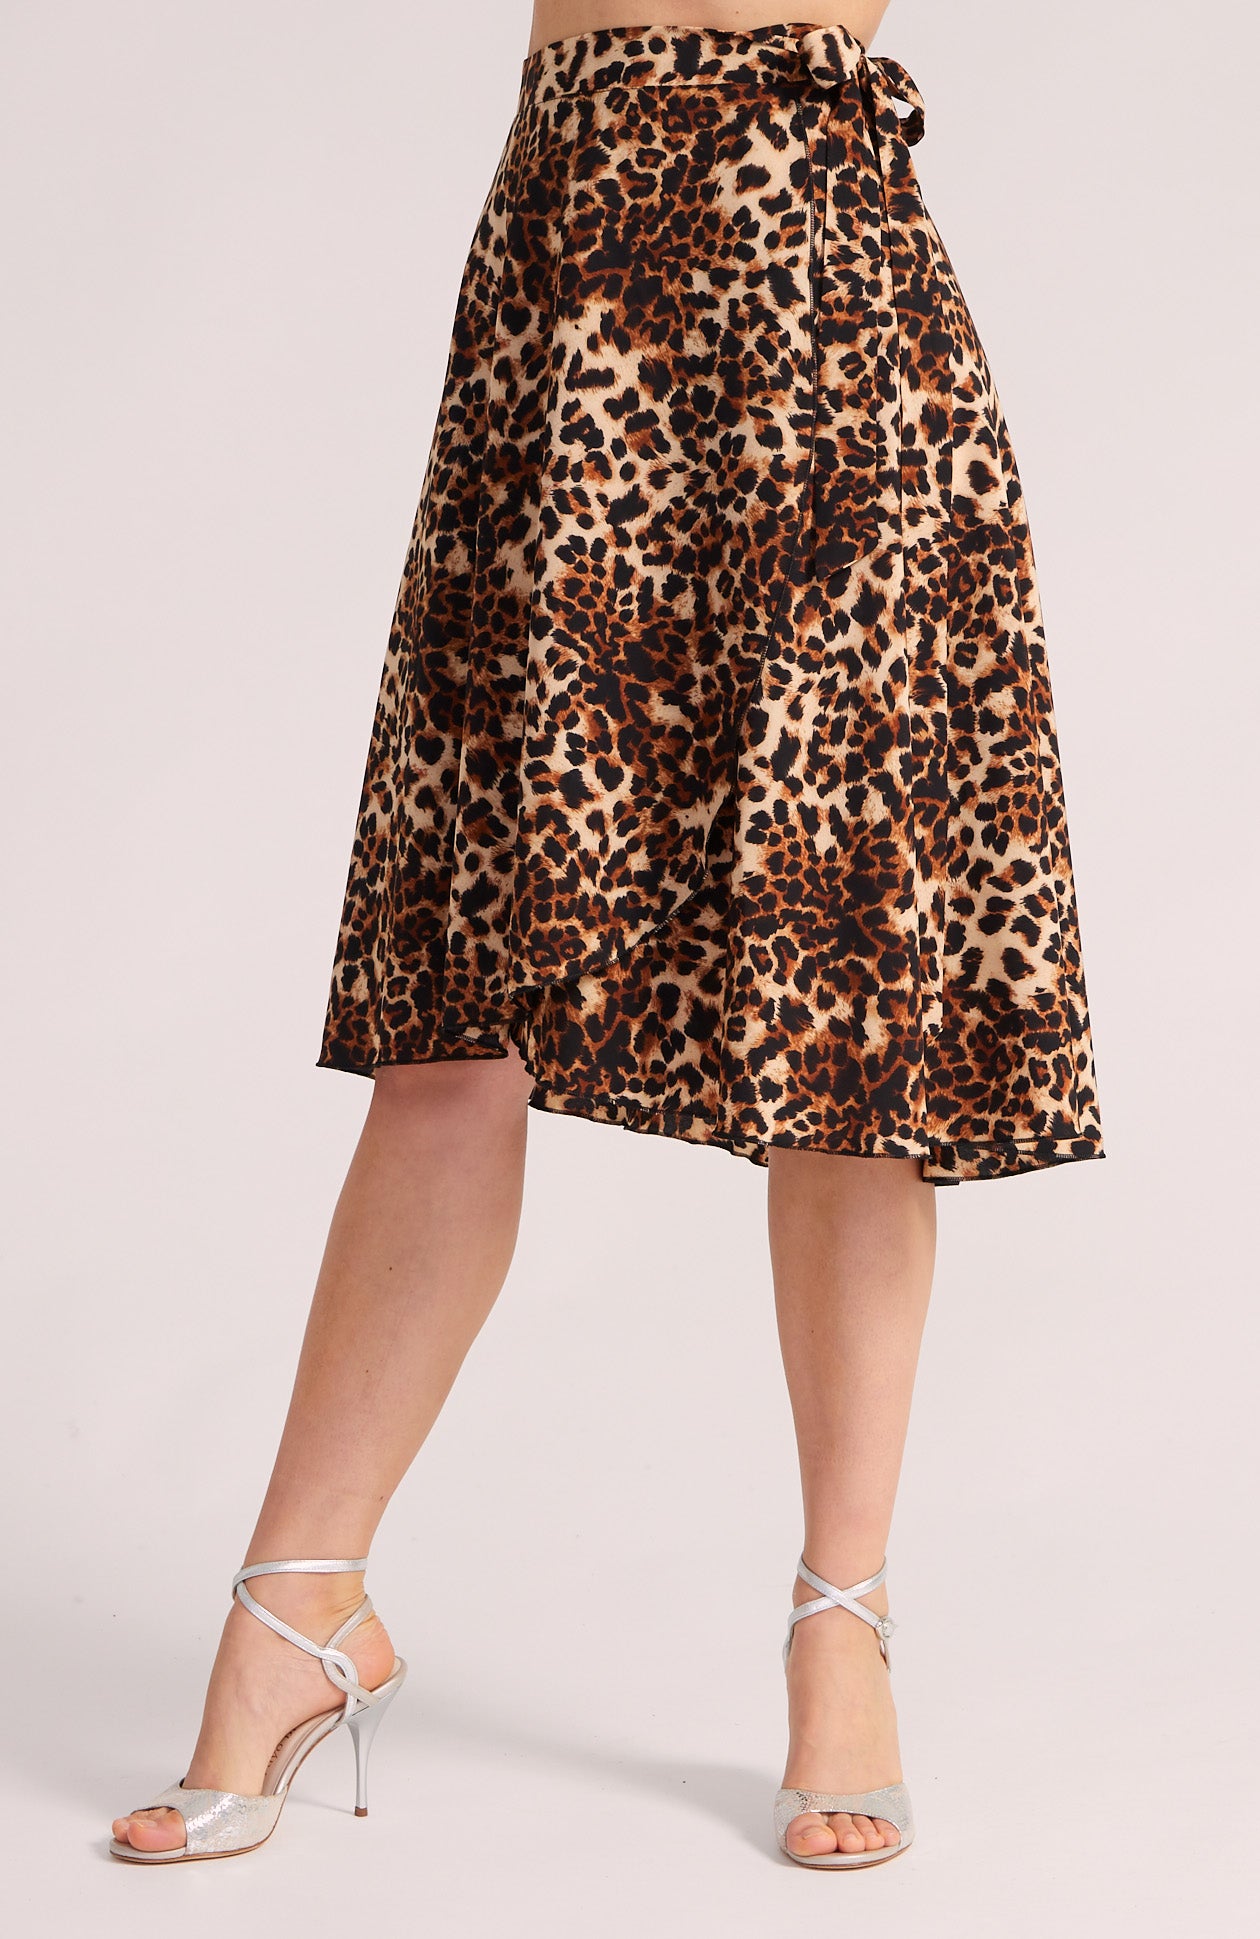 COCO - Leopard Wrap Skirt